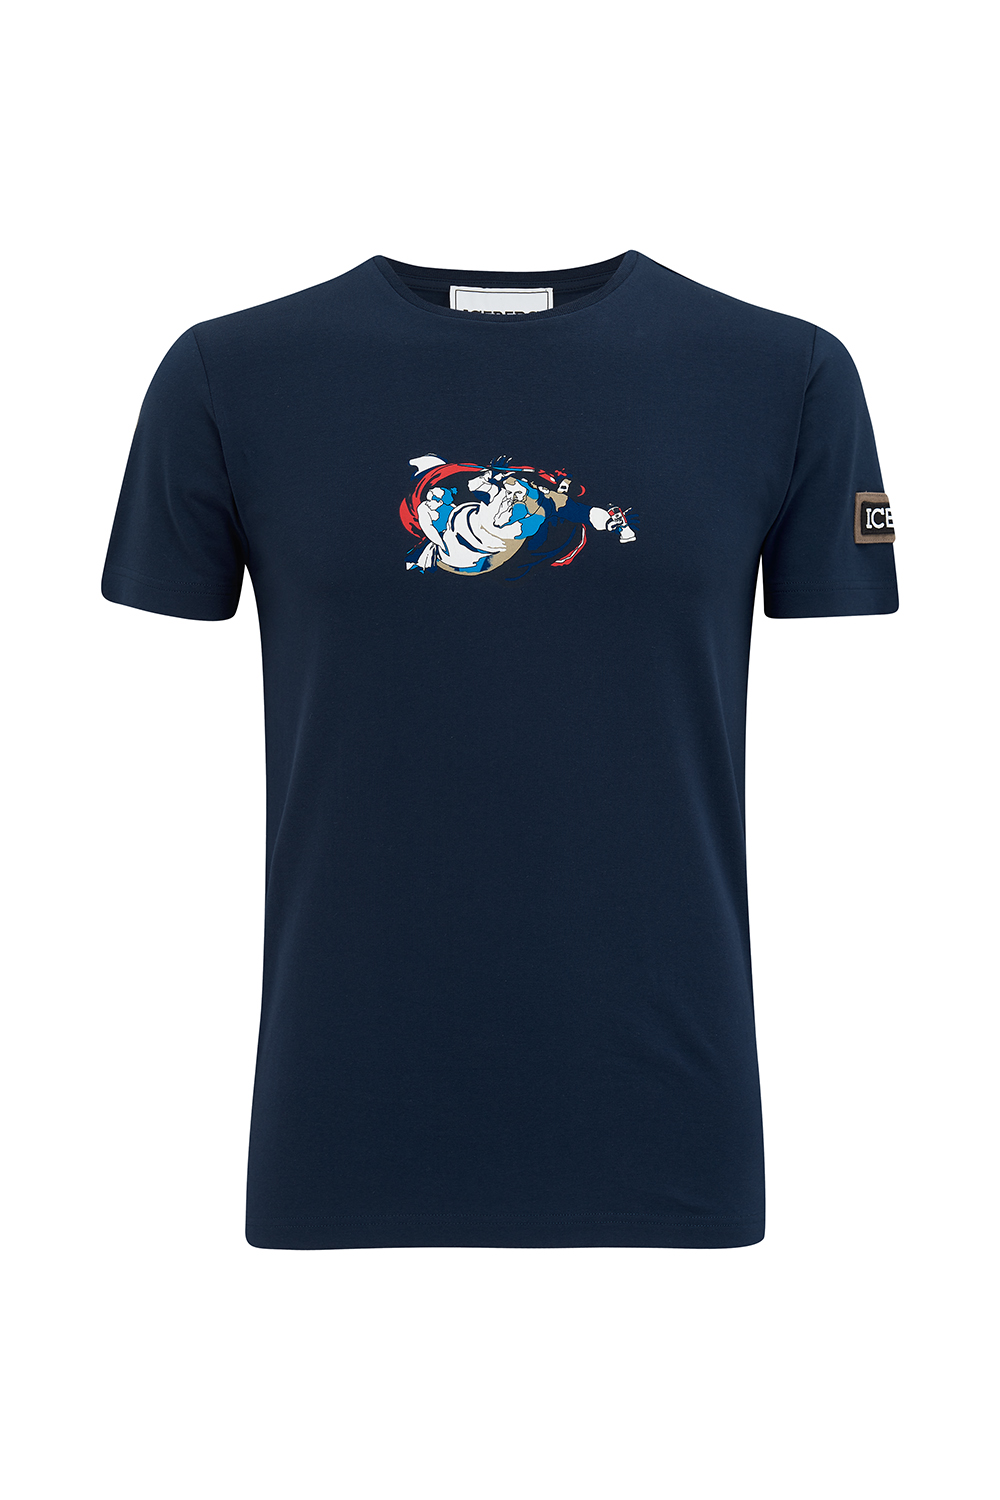 Iceberg Men's Michelangelo Graphic Print T-shirt Navy - New SS21 